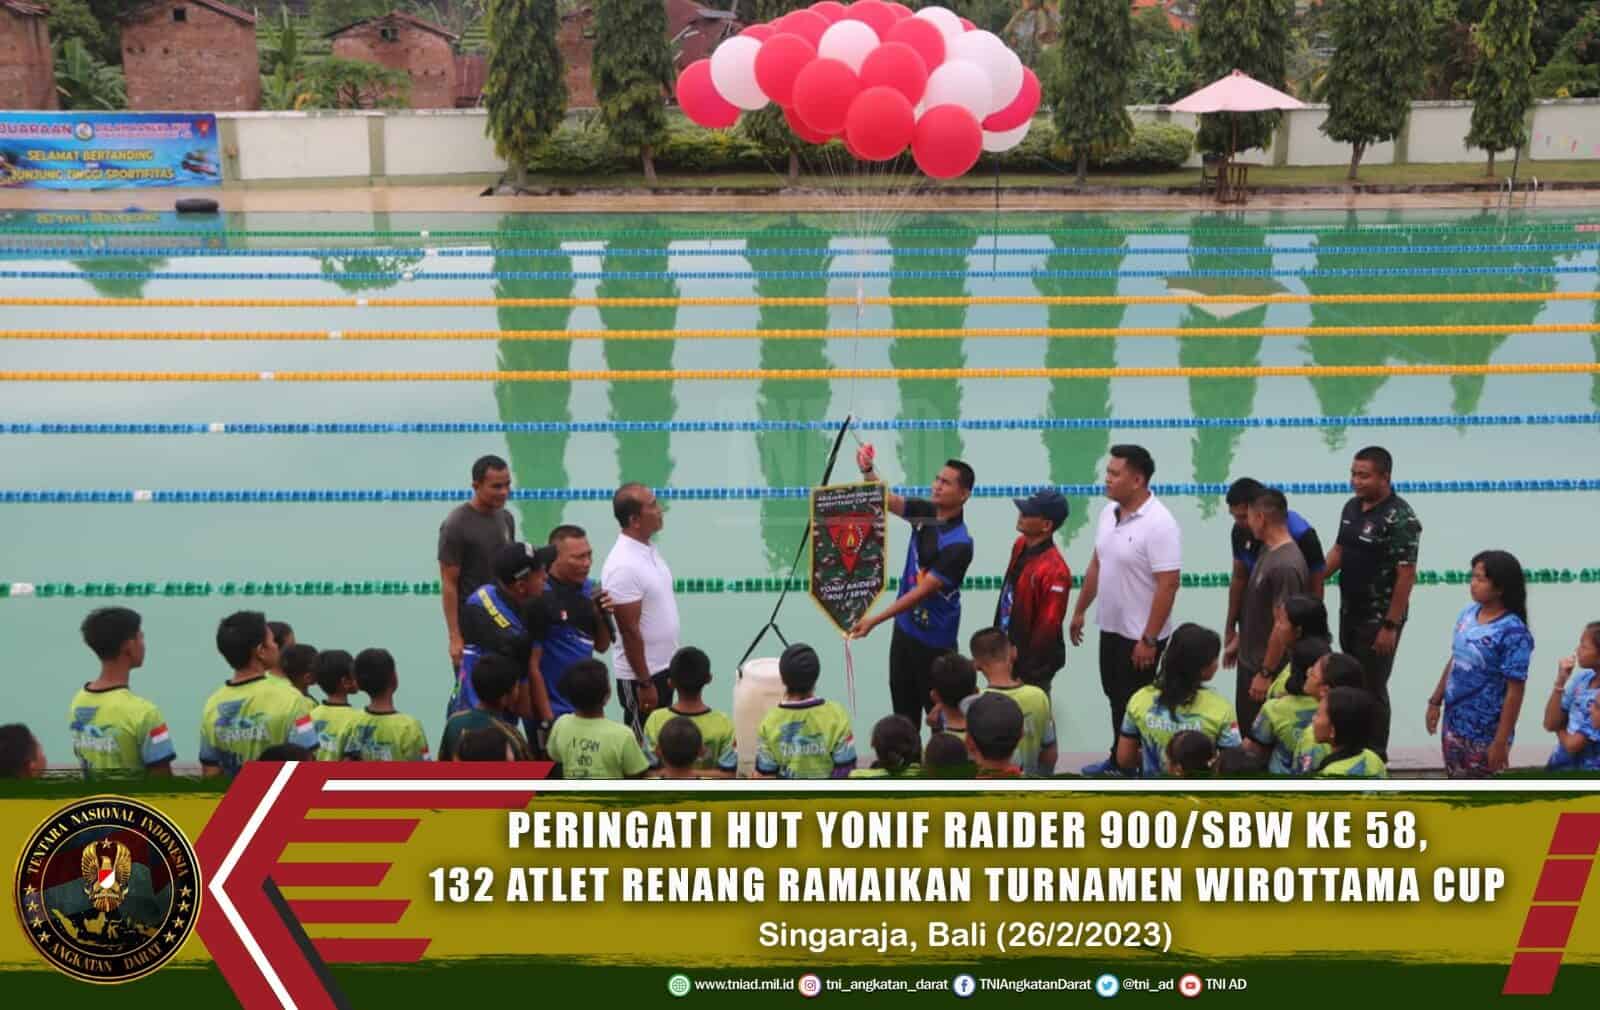 Peringati HUT Yonif Raider 900/SBW ke 58, 132 Atlet Renang Ramaikan Turnamen Wirottama Cup